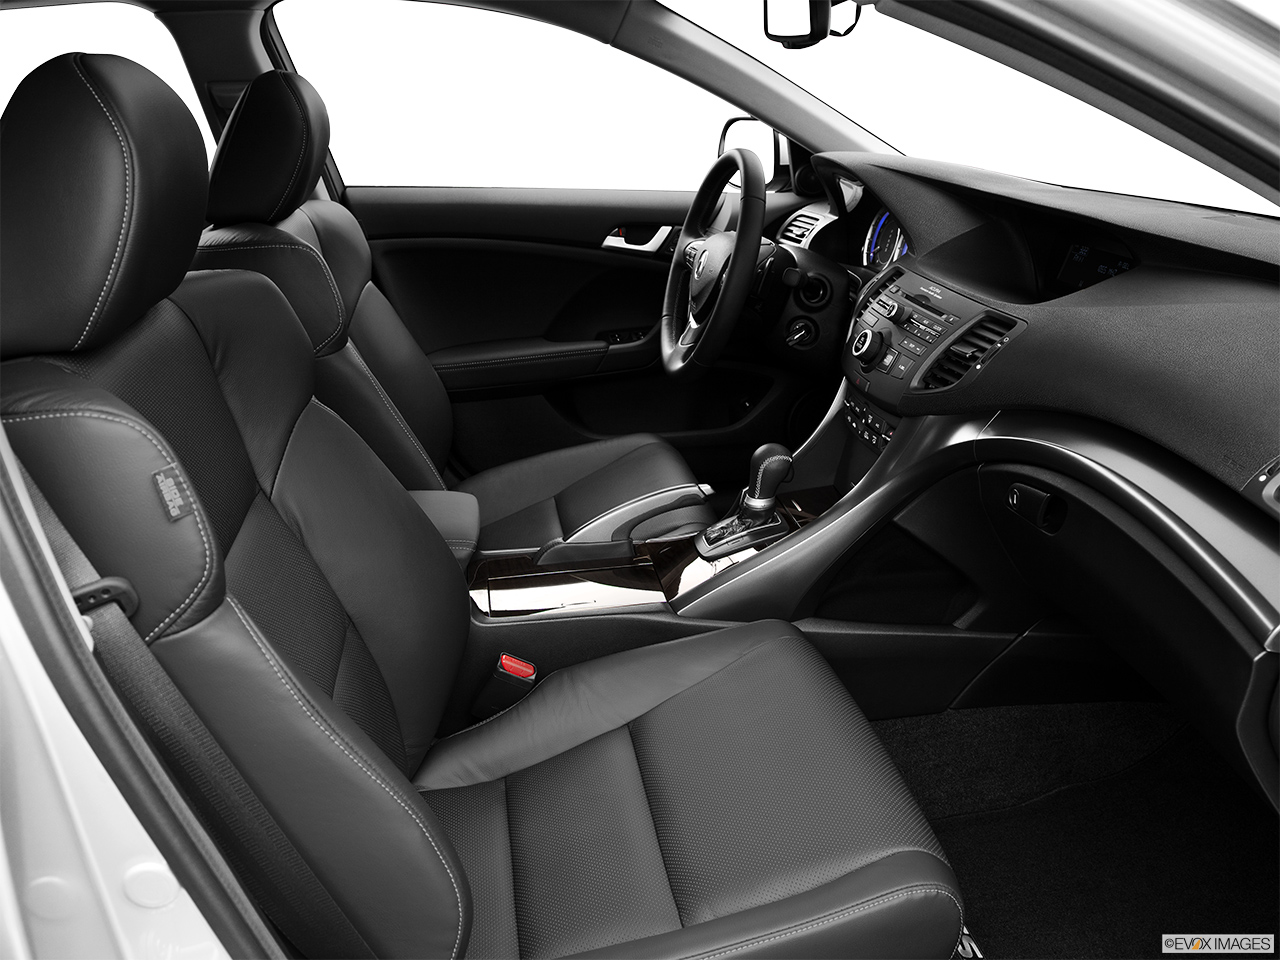 2013 Acura TSX 5-speed Automatic Passenger seat. 